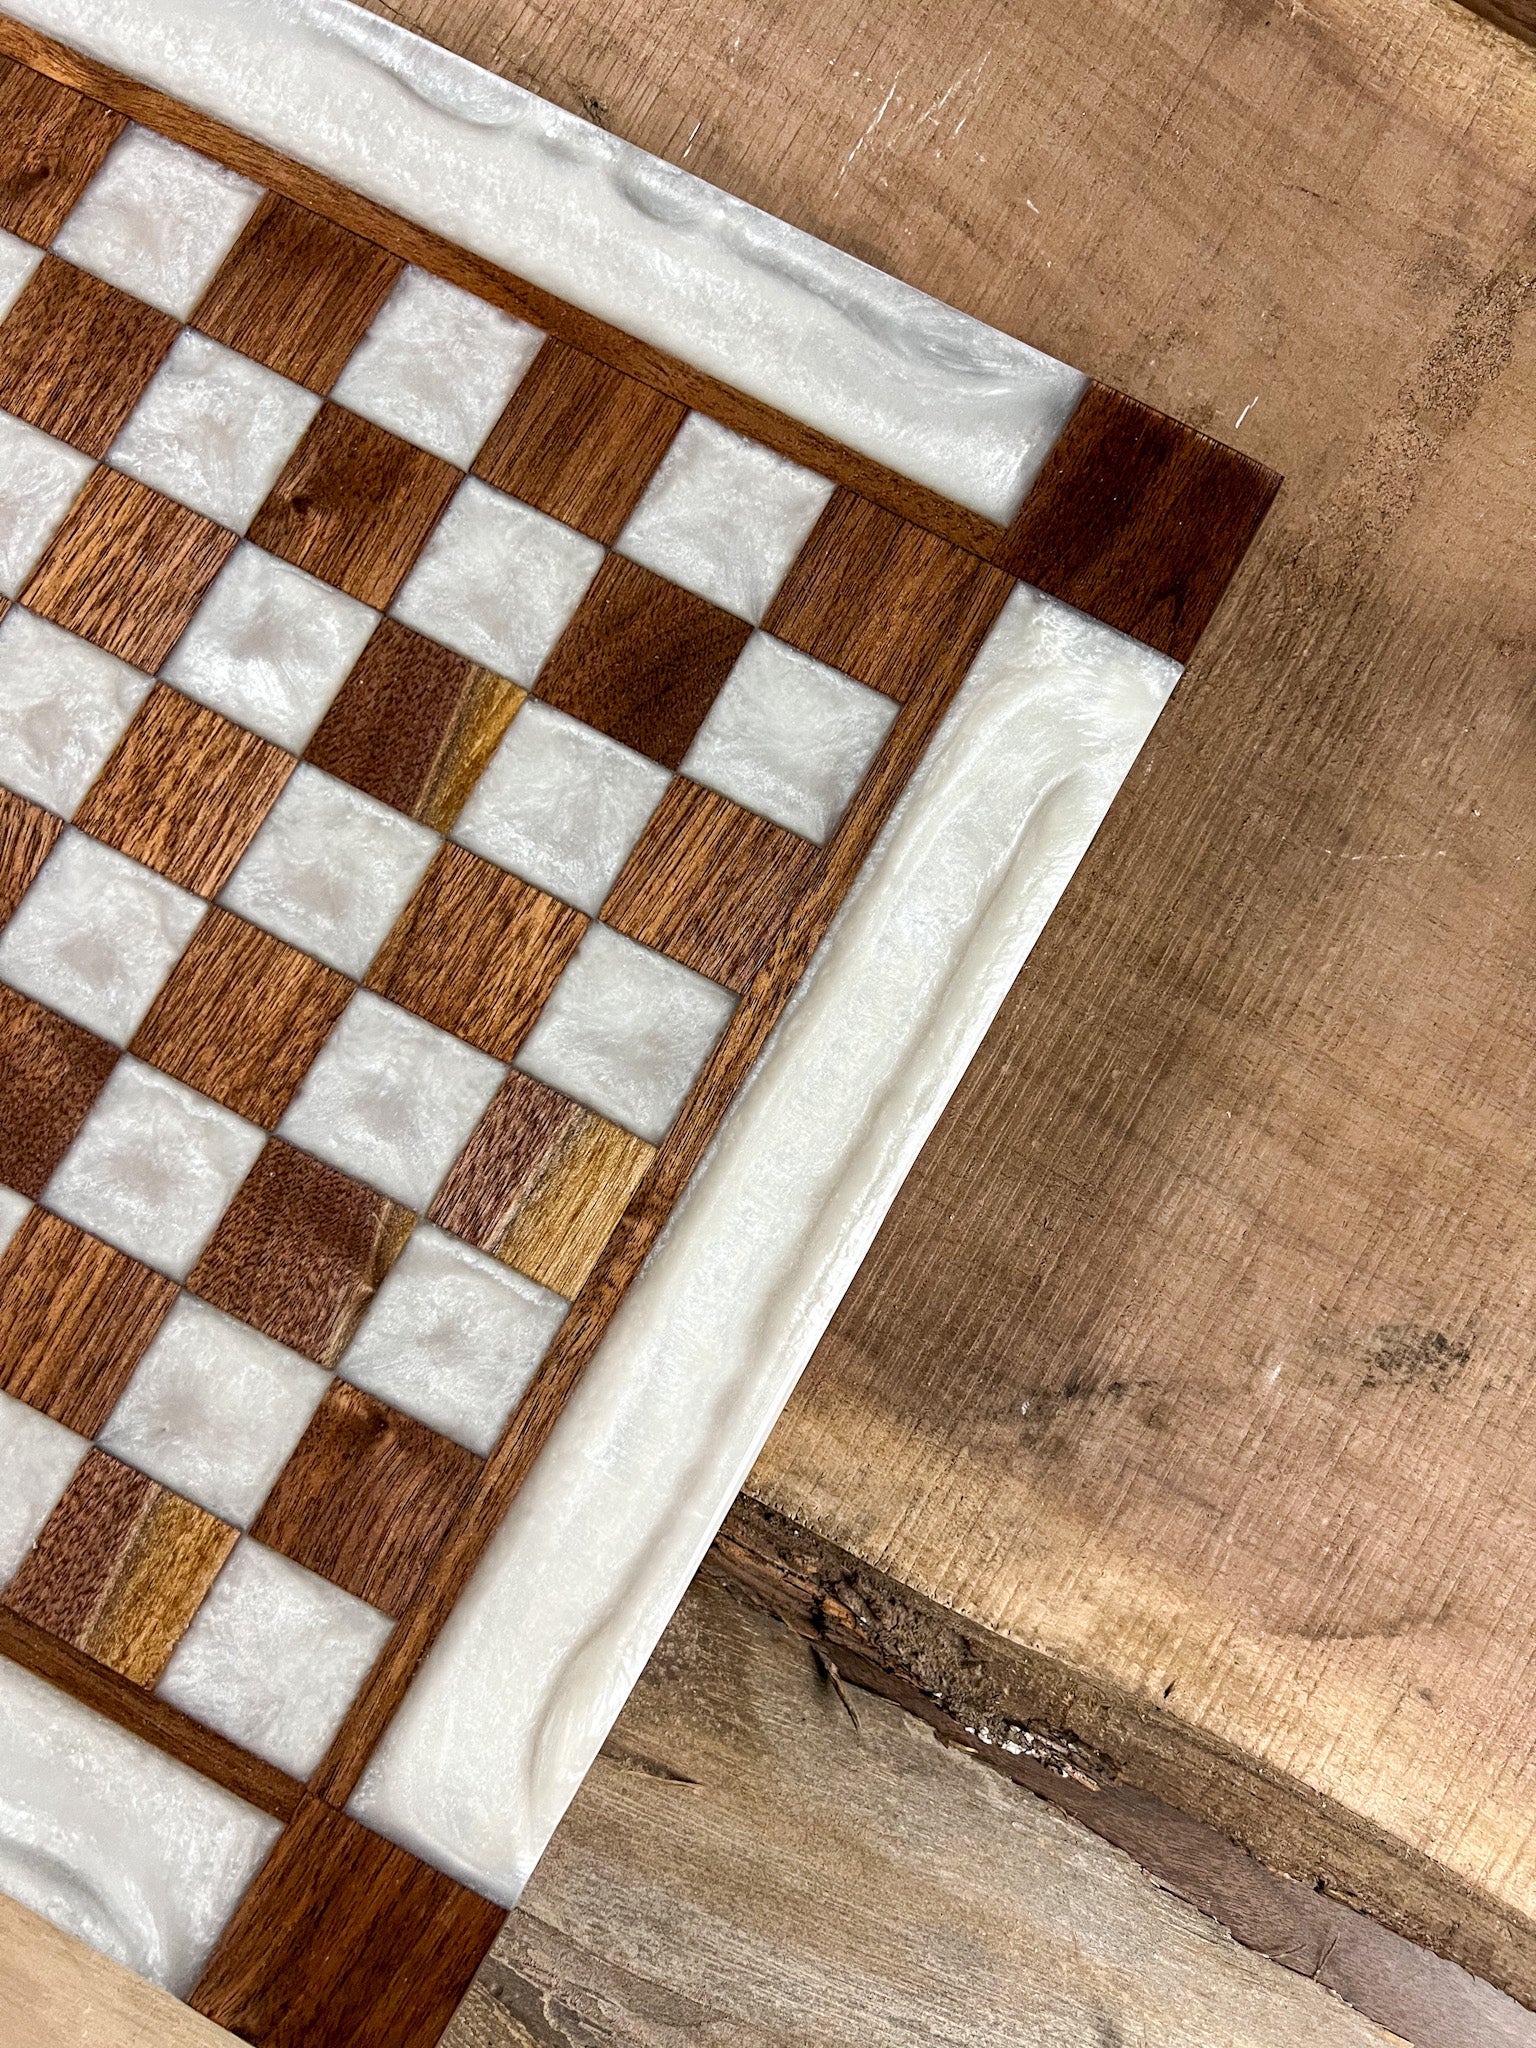 Pure Pearl White Black Walnut Chess Board (With Border)